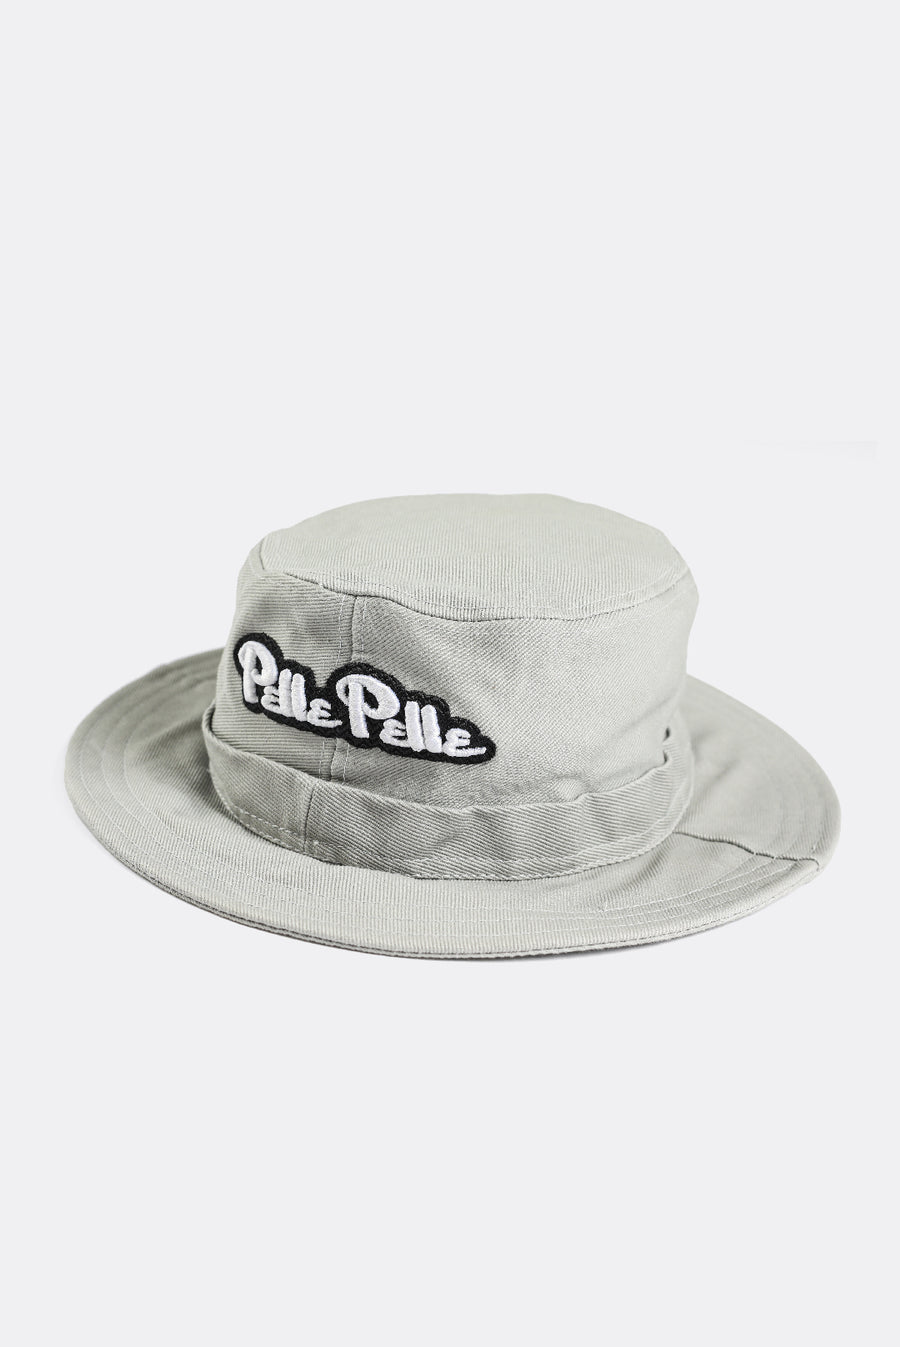 Vintage Pelle Pelle Bucket Hat